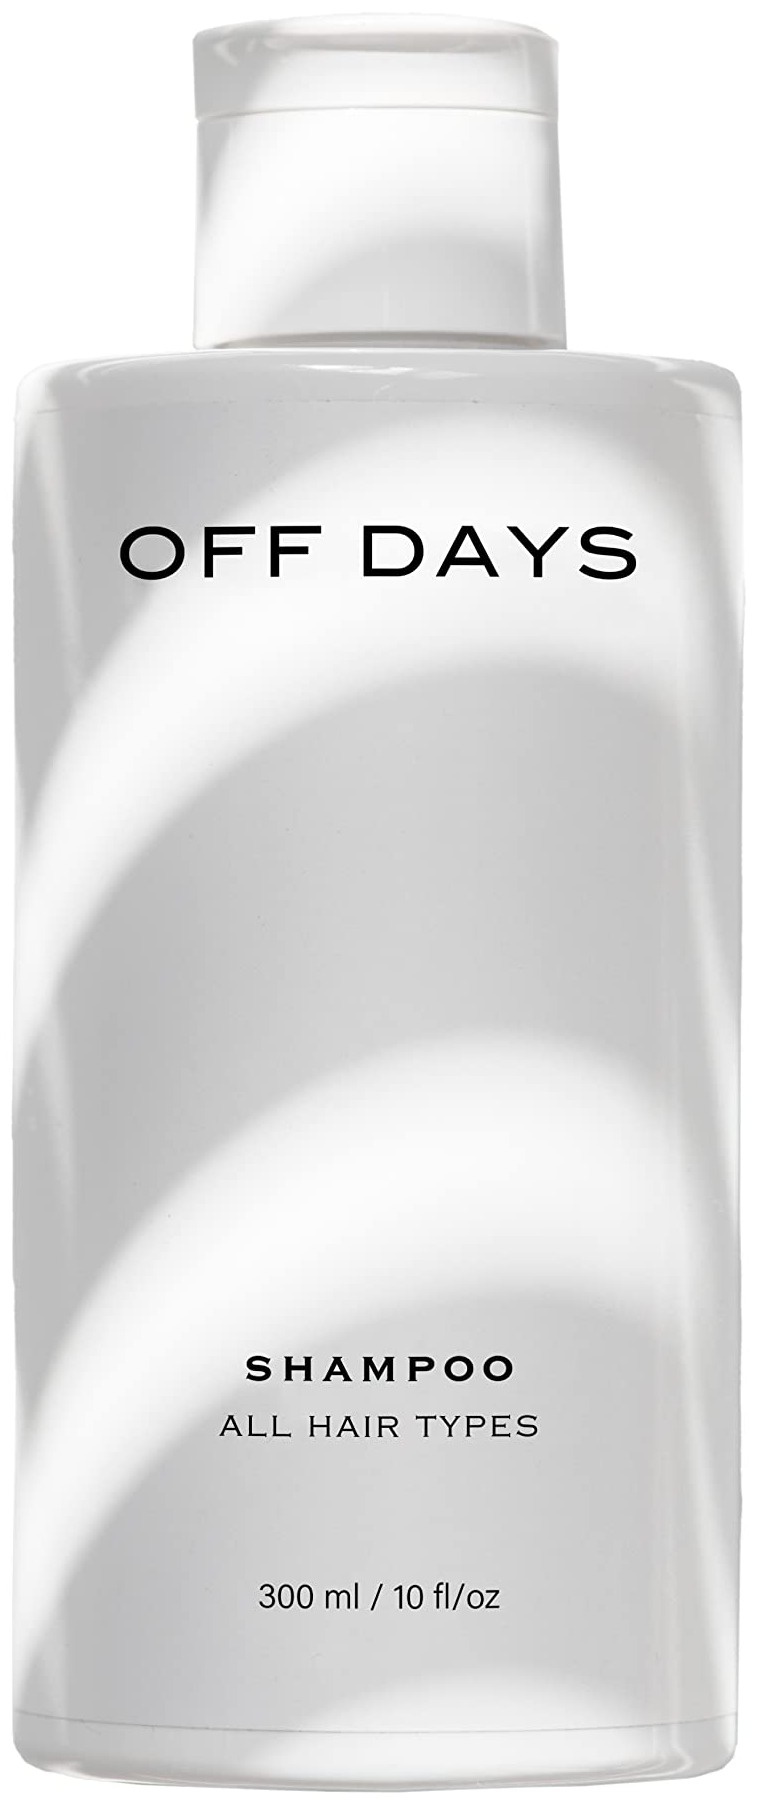 Off Days Shampoo